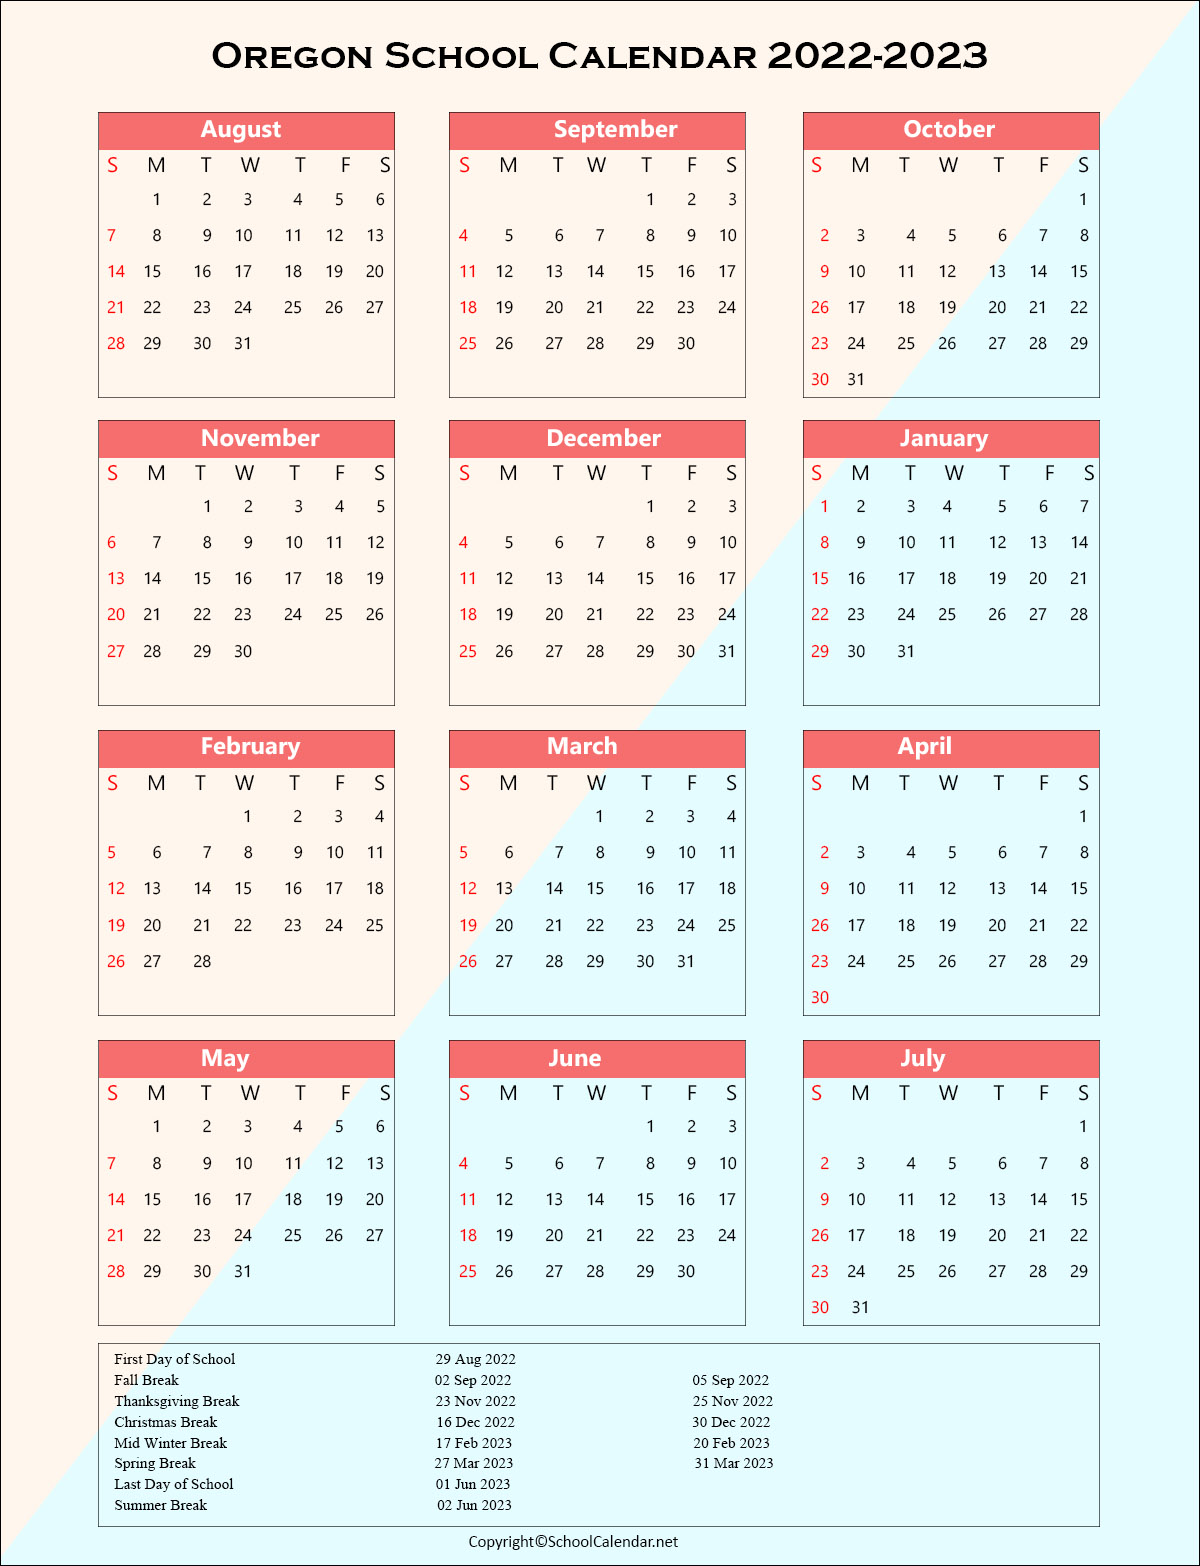 Oregon School Holiday Calendar 2022